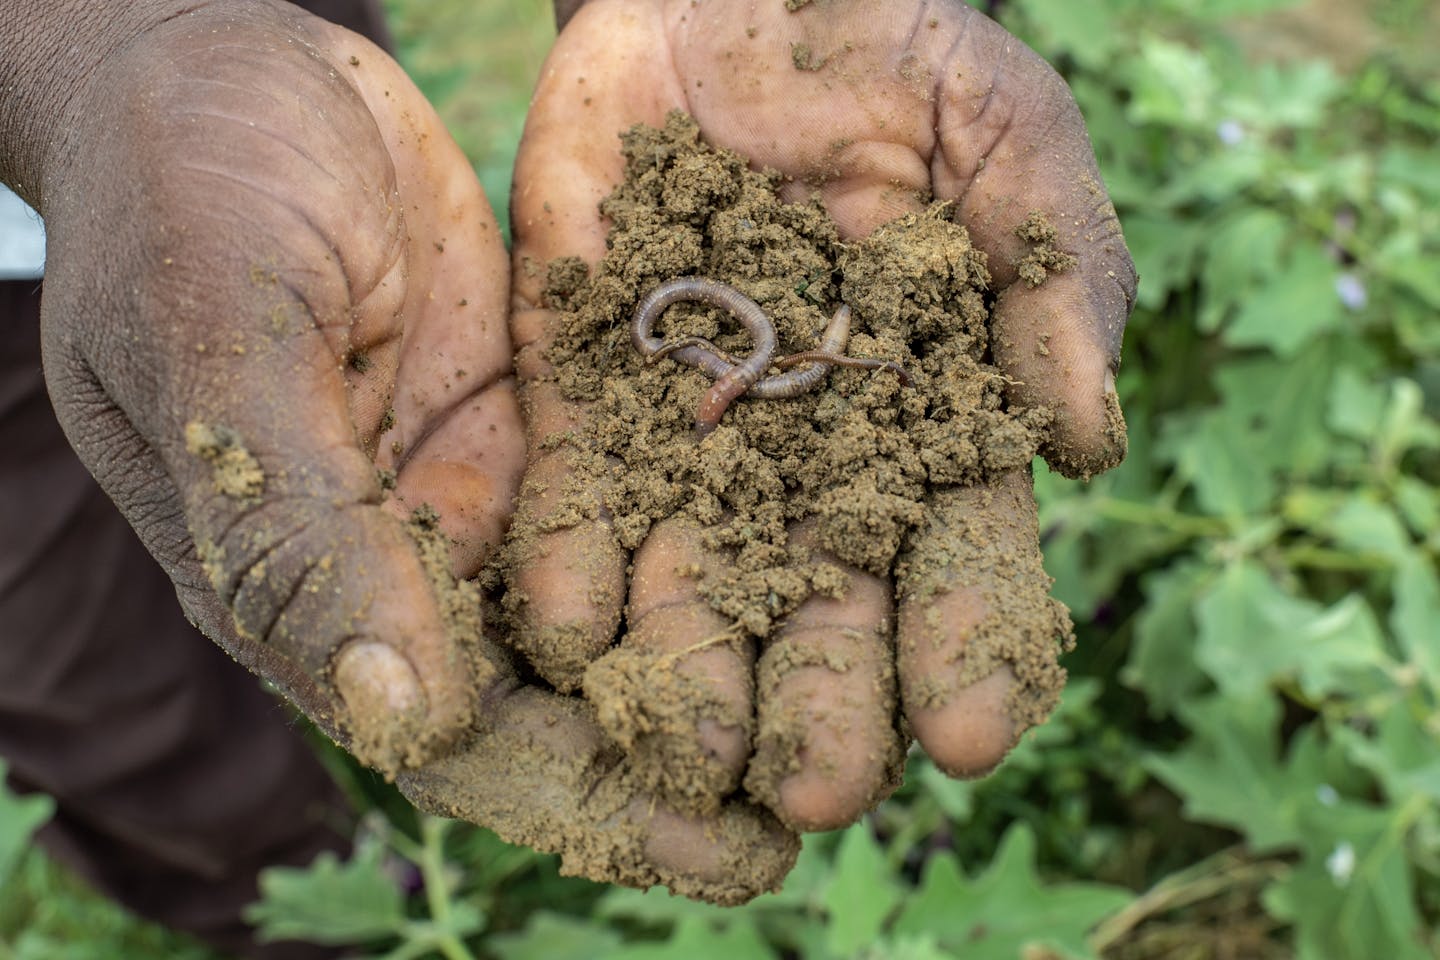 A farmer holding soil